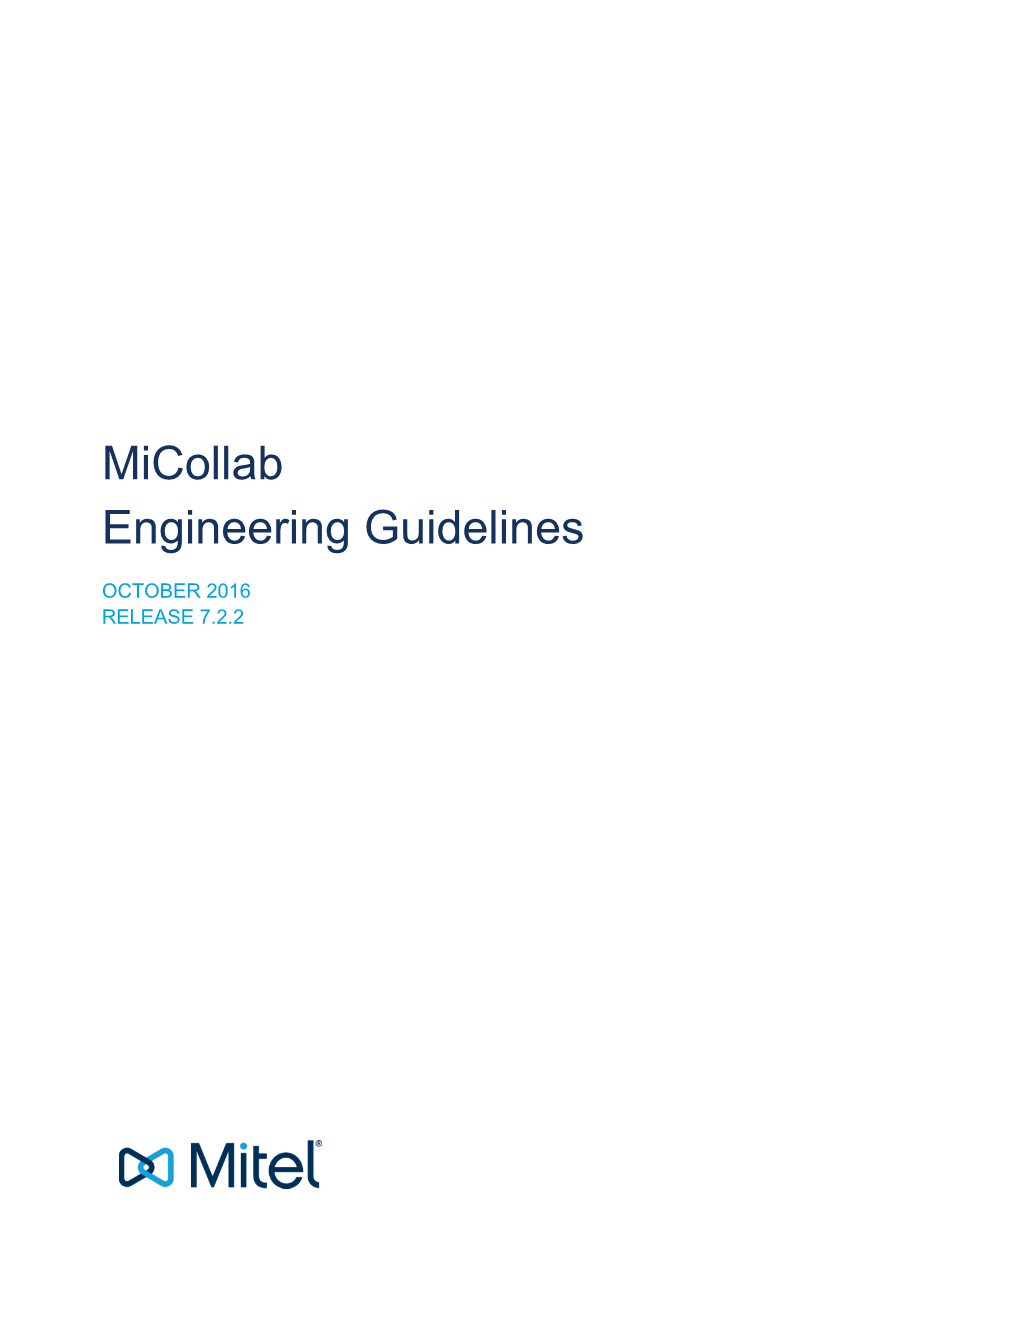 Micollab Engineering Guidelines